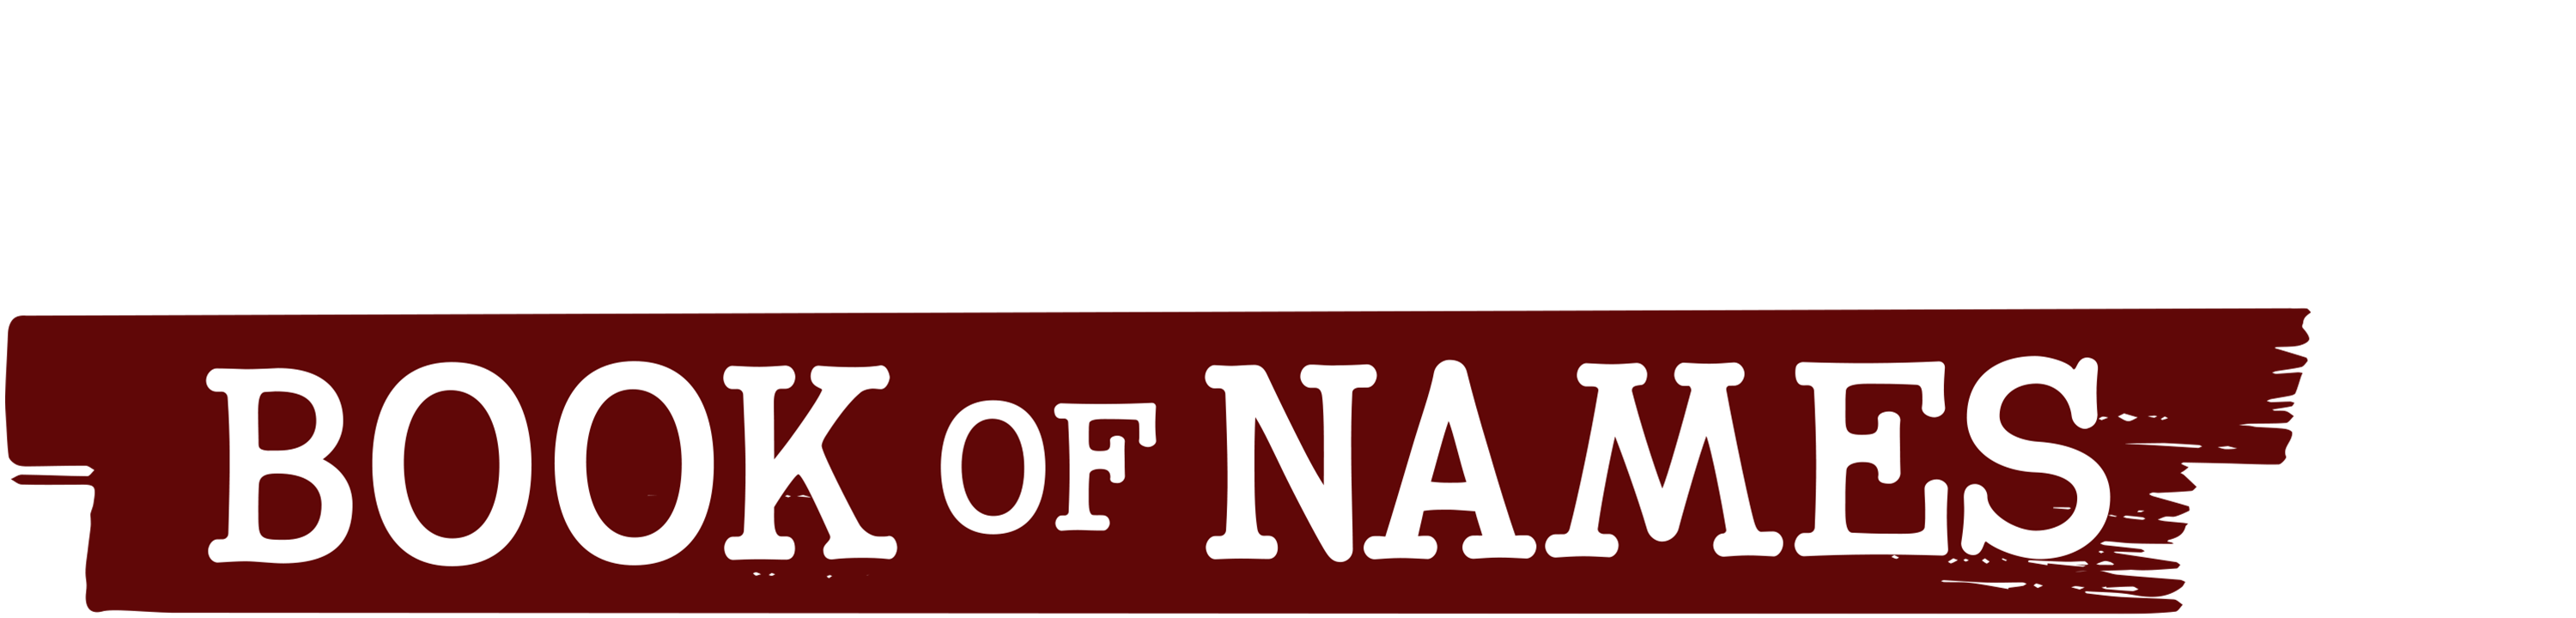 Jeffrey's Book of Names logo